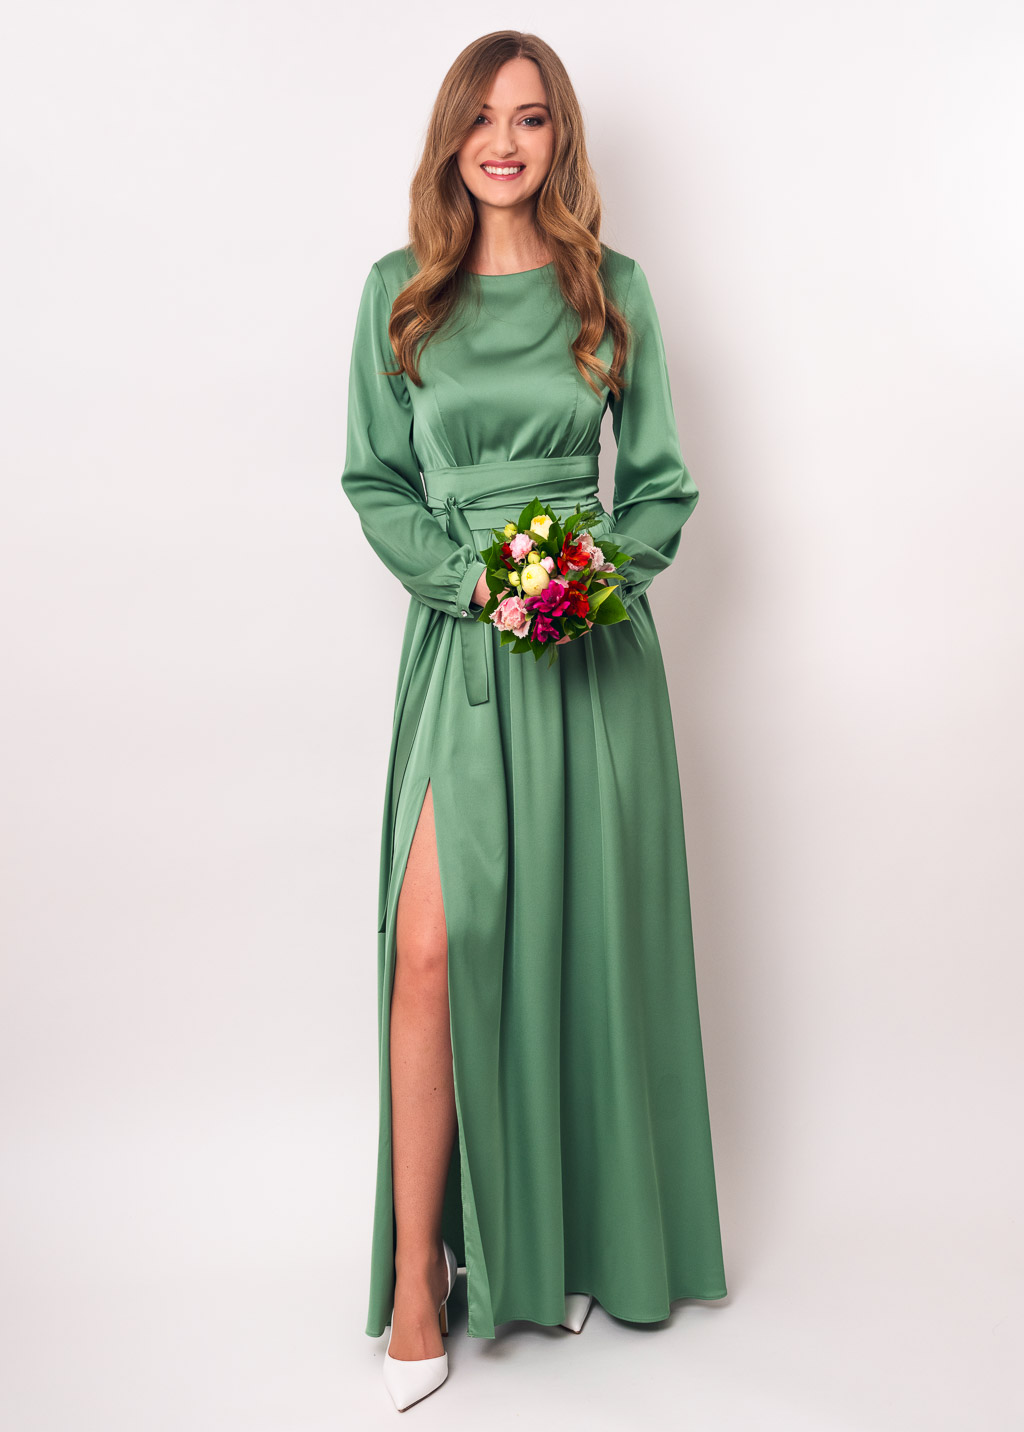 Olive green long silk dress with belt